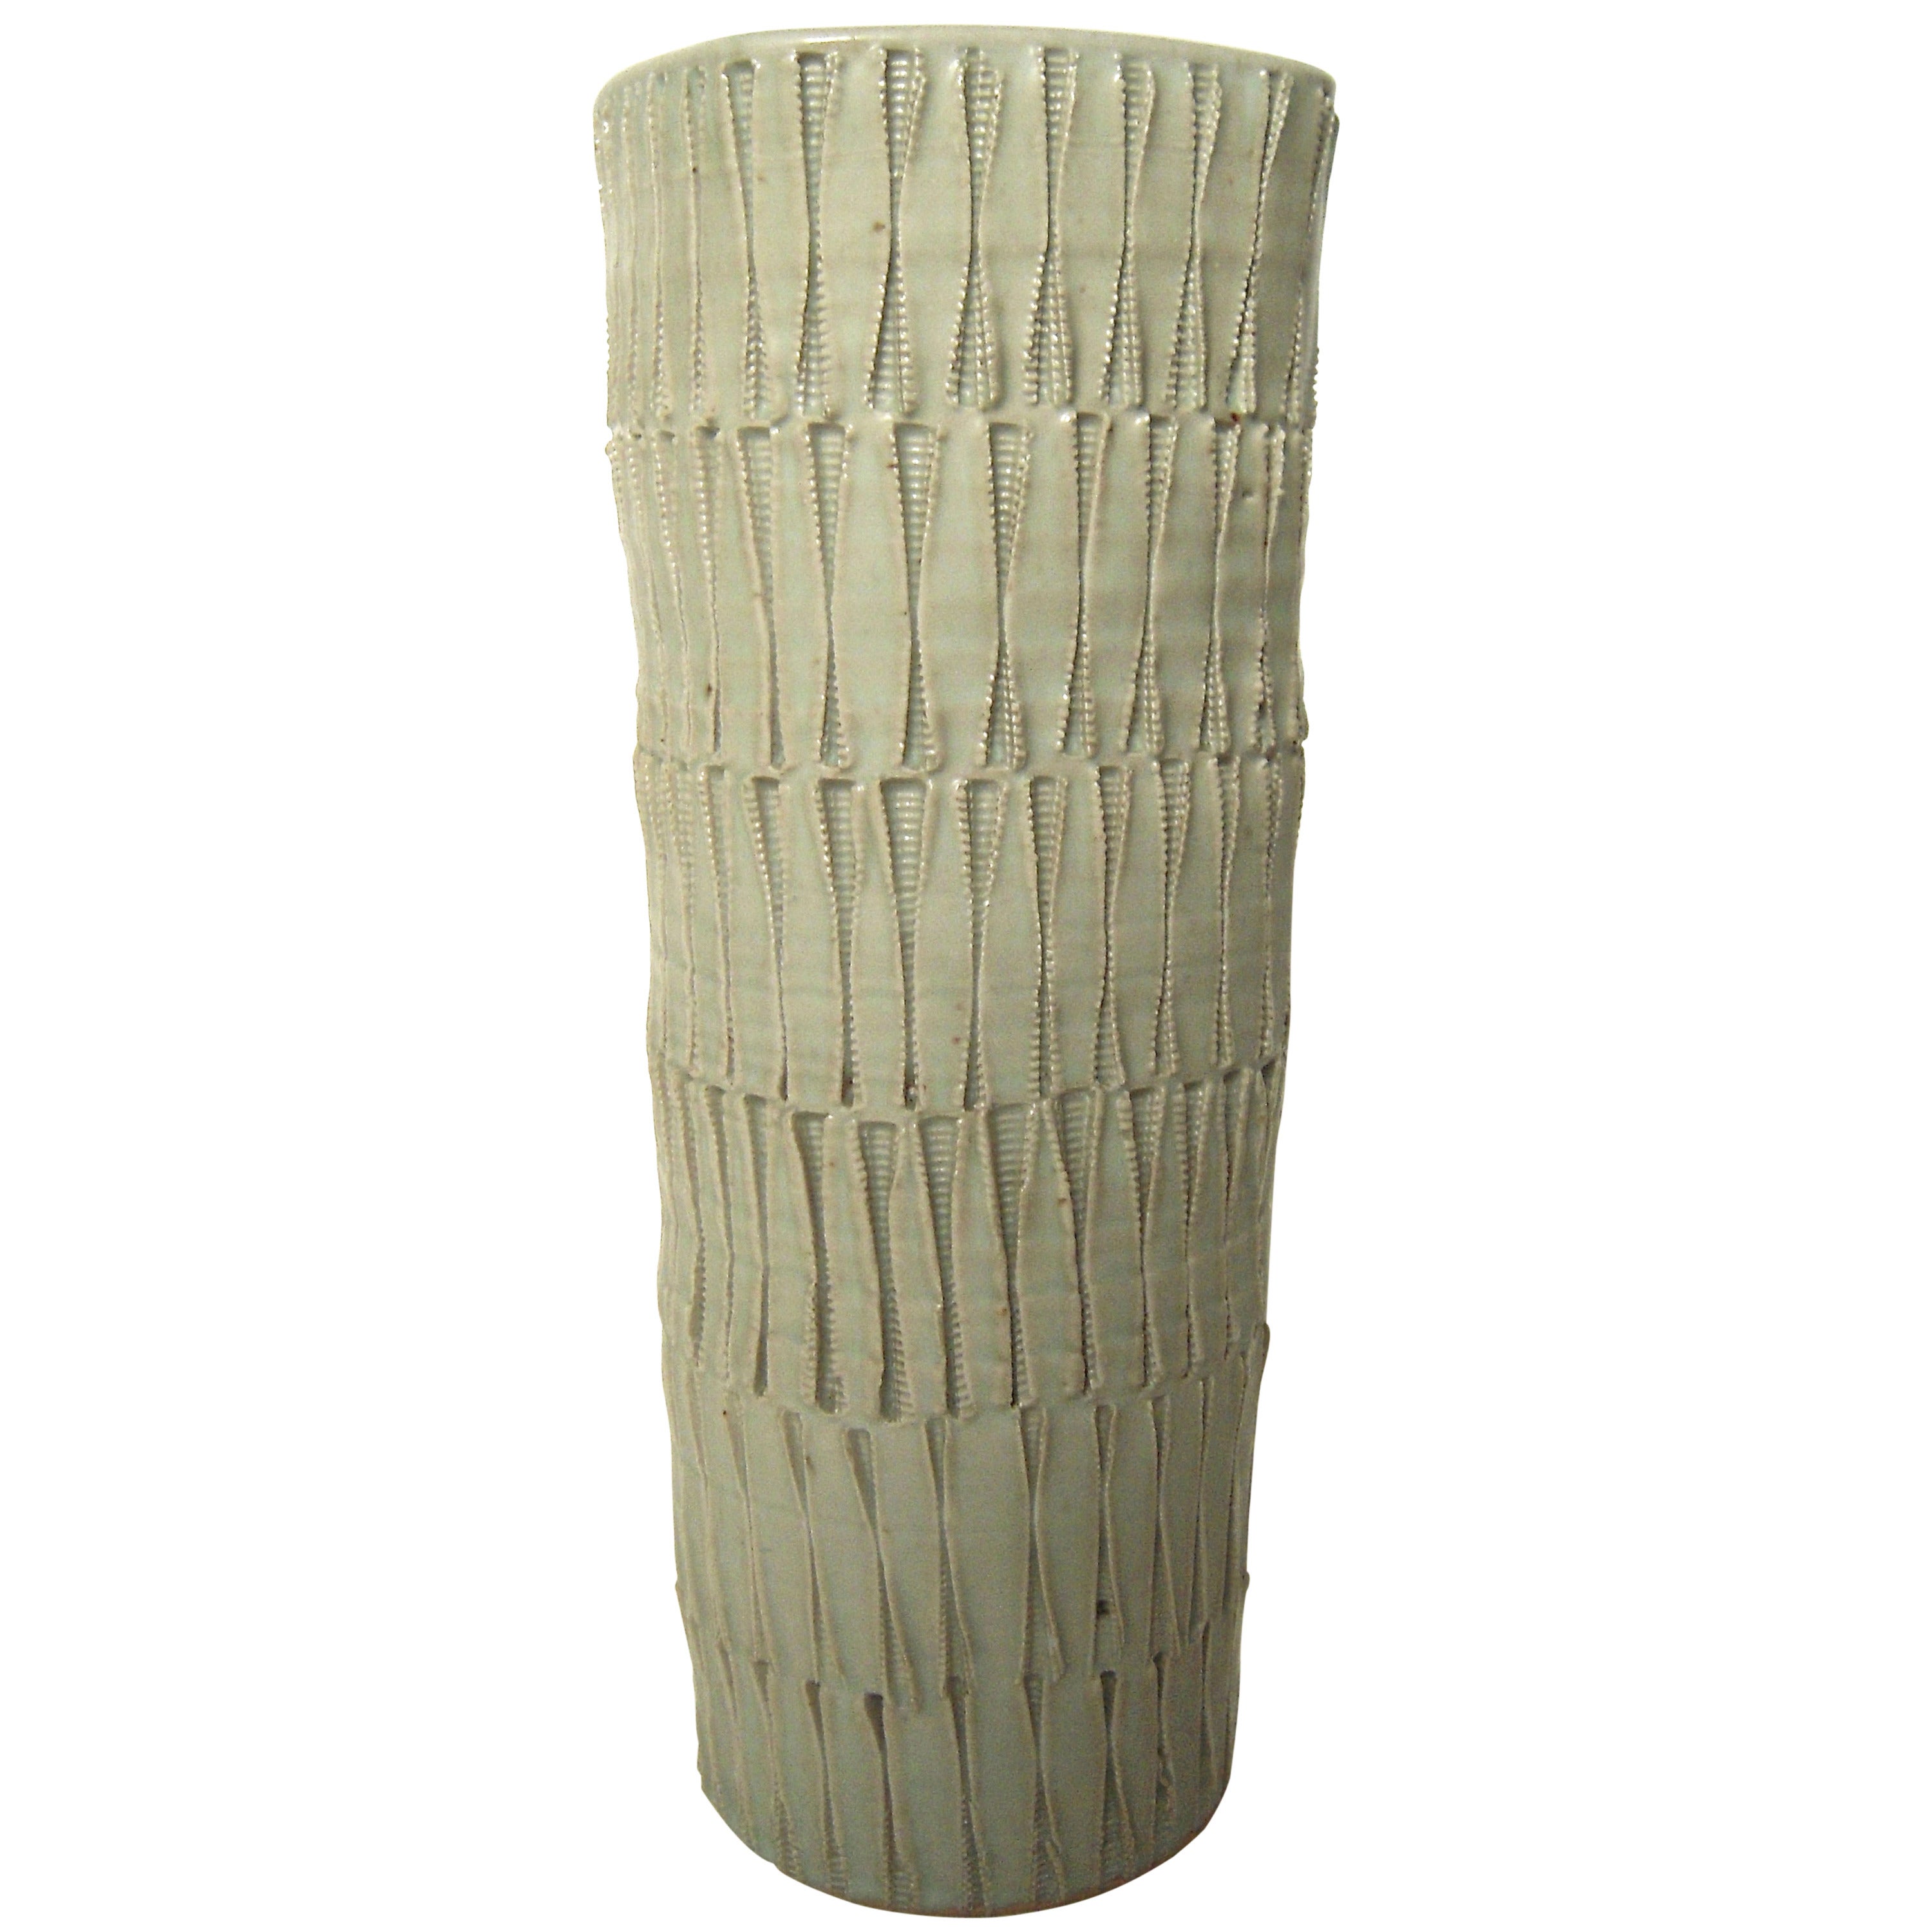 Japanese Art Pottery Vase